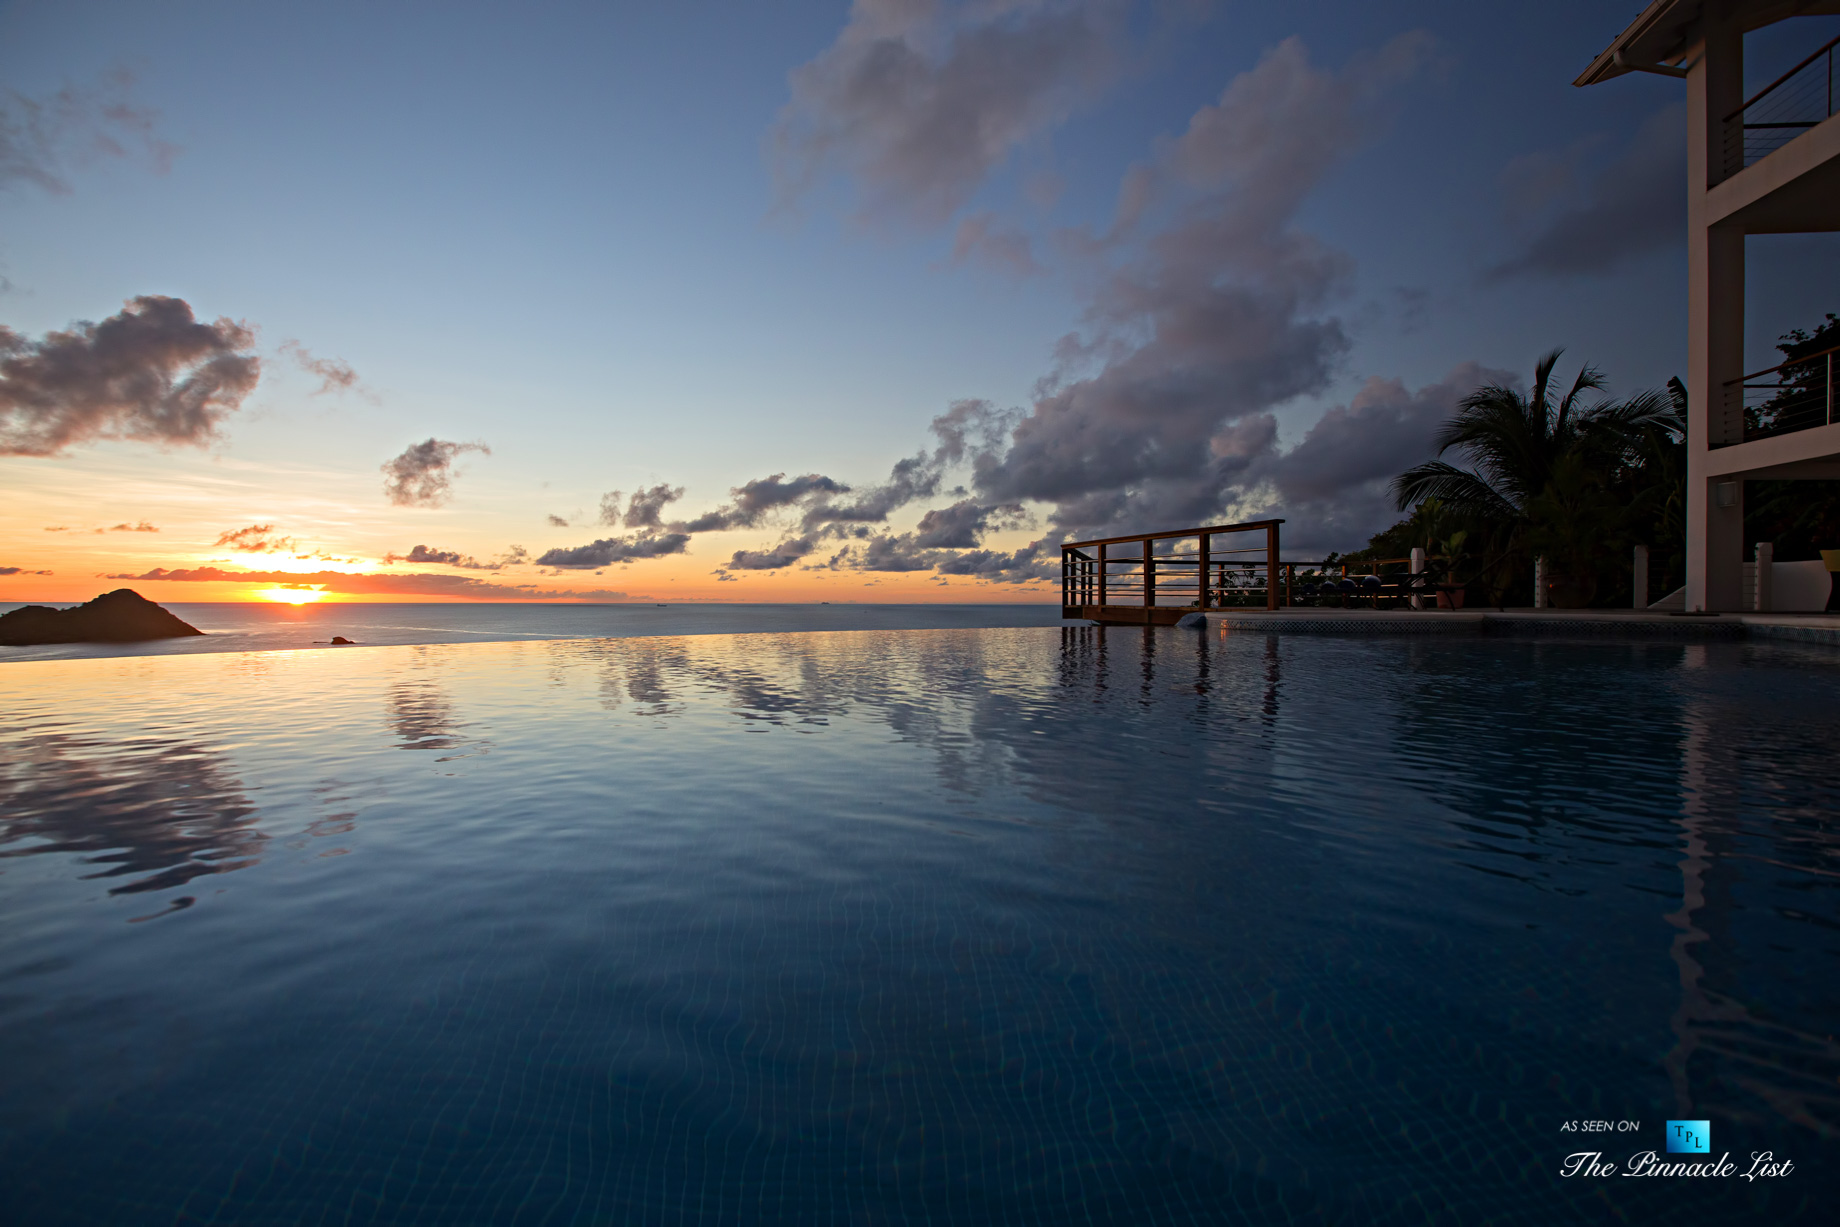 Akasha Luxury Caribbean Villa - Cap Estate, St. Lucia - Infinity Pool Sunset View - Luxury Real Estate - Premier Oceanview Home